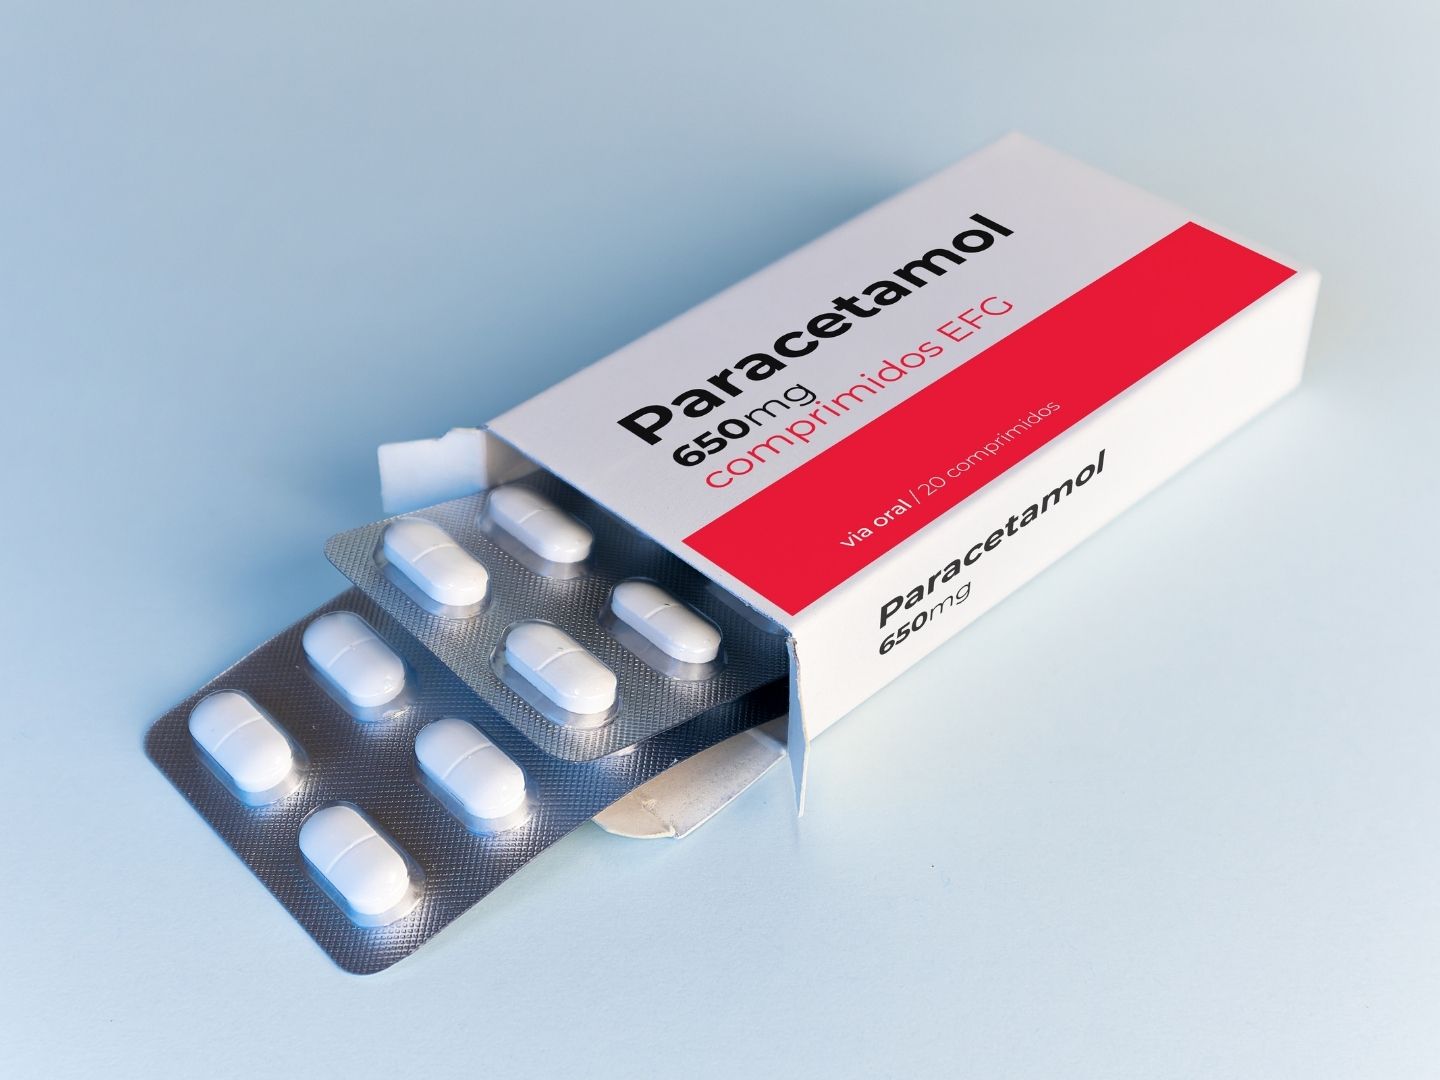 Analgetik Parcetamol s tabletama koje vire iz kartonske kutije